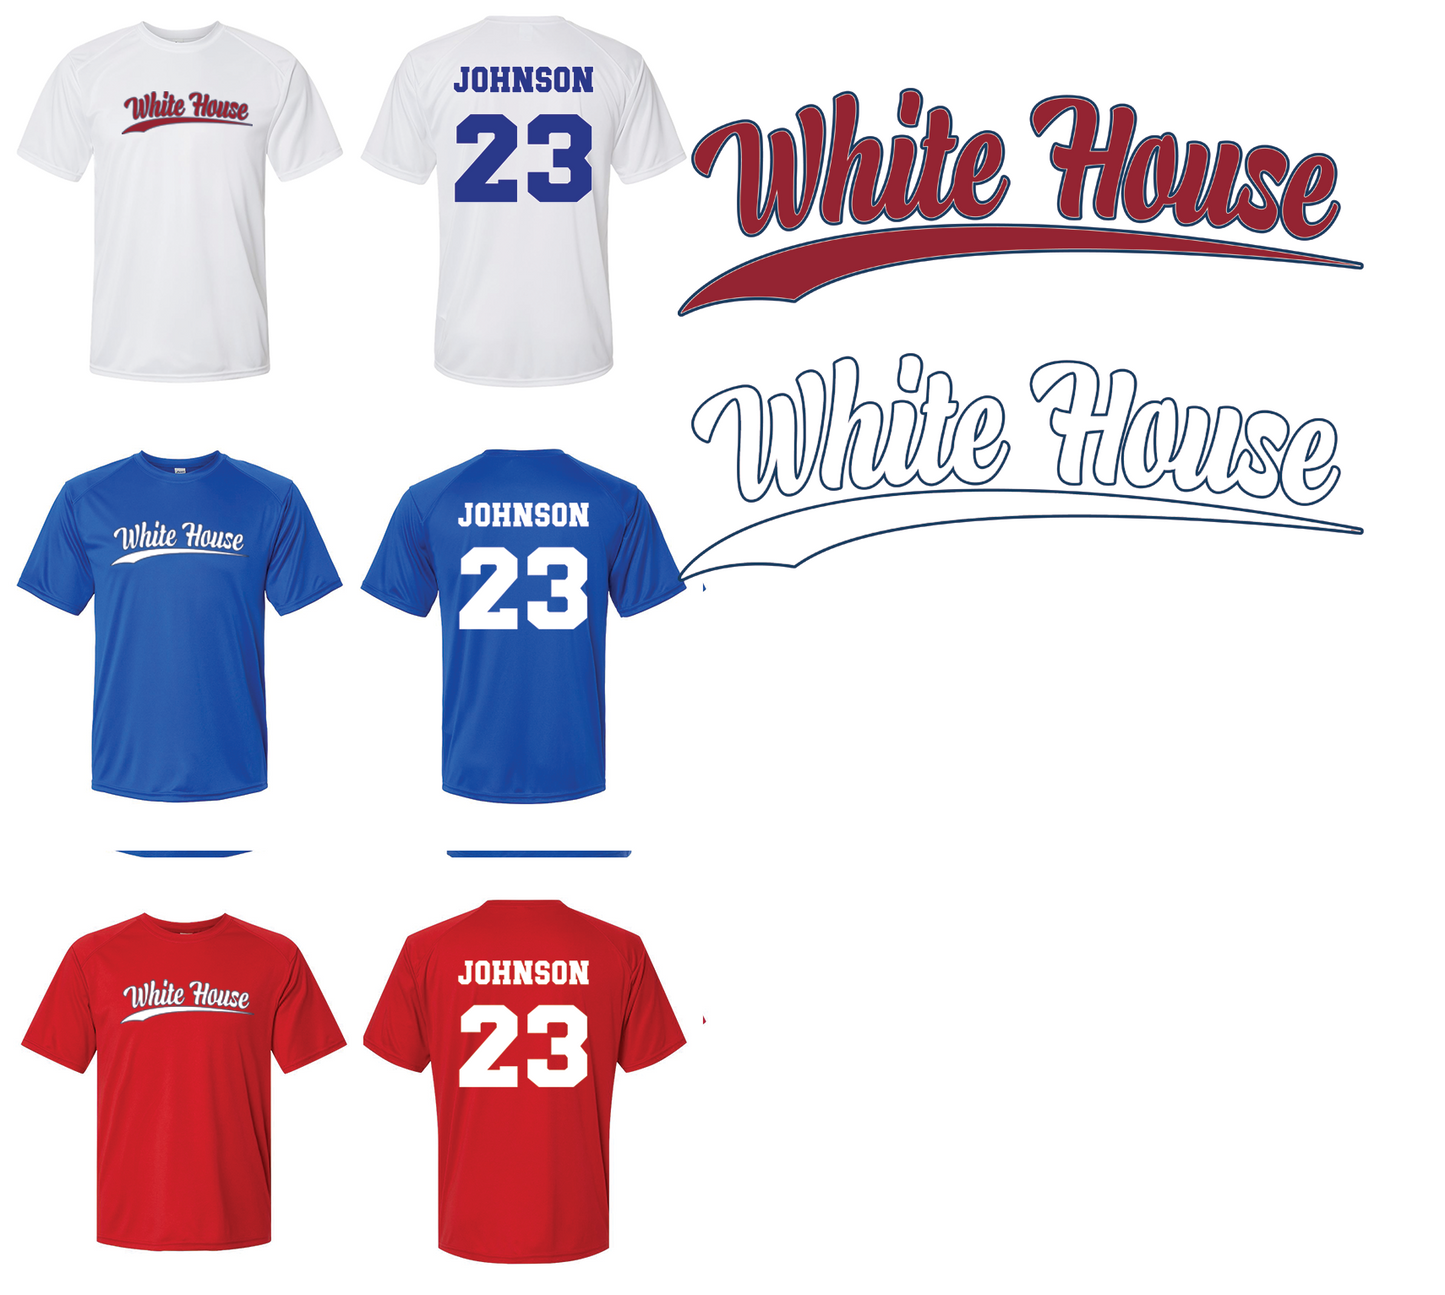 Whitehouse Softball/Baseball Shirts